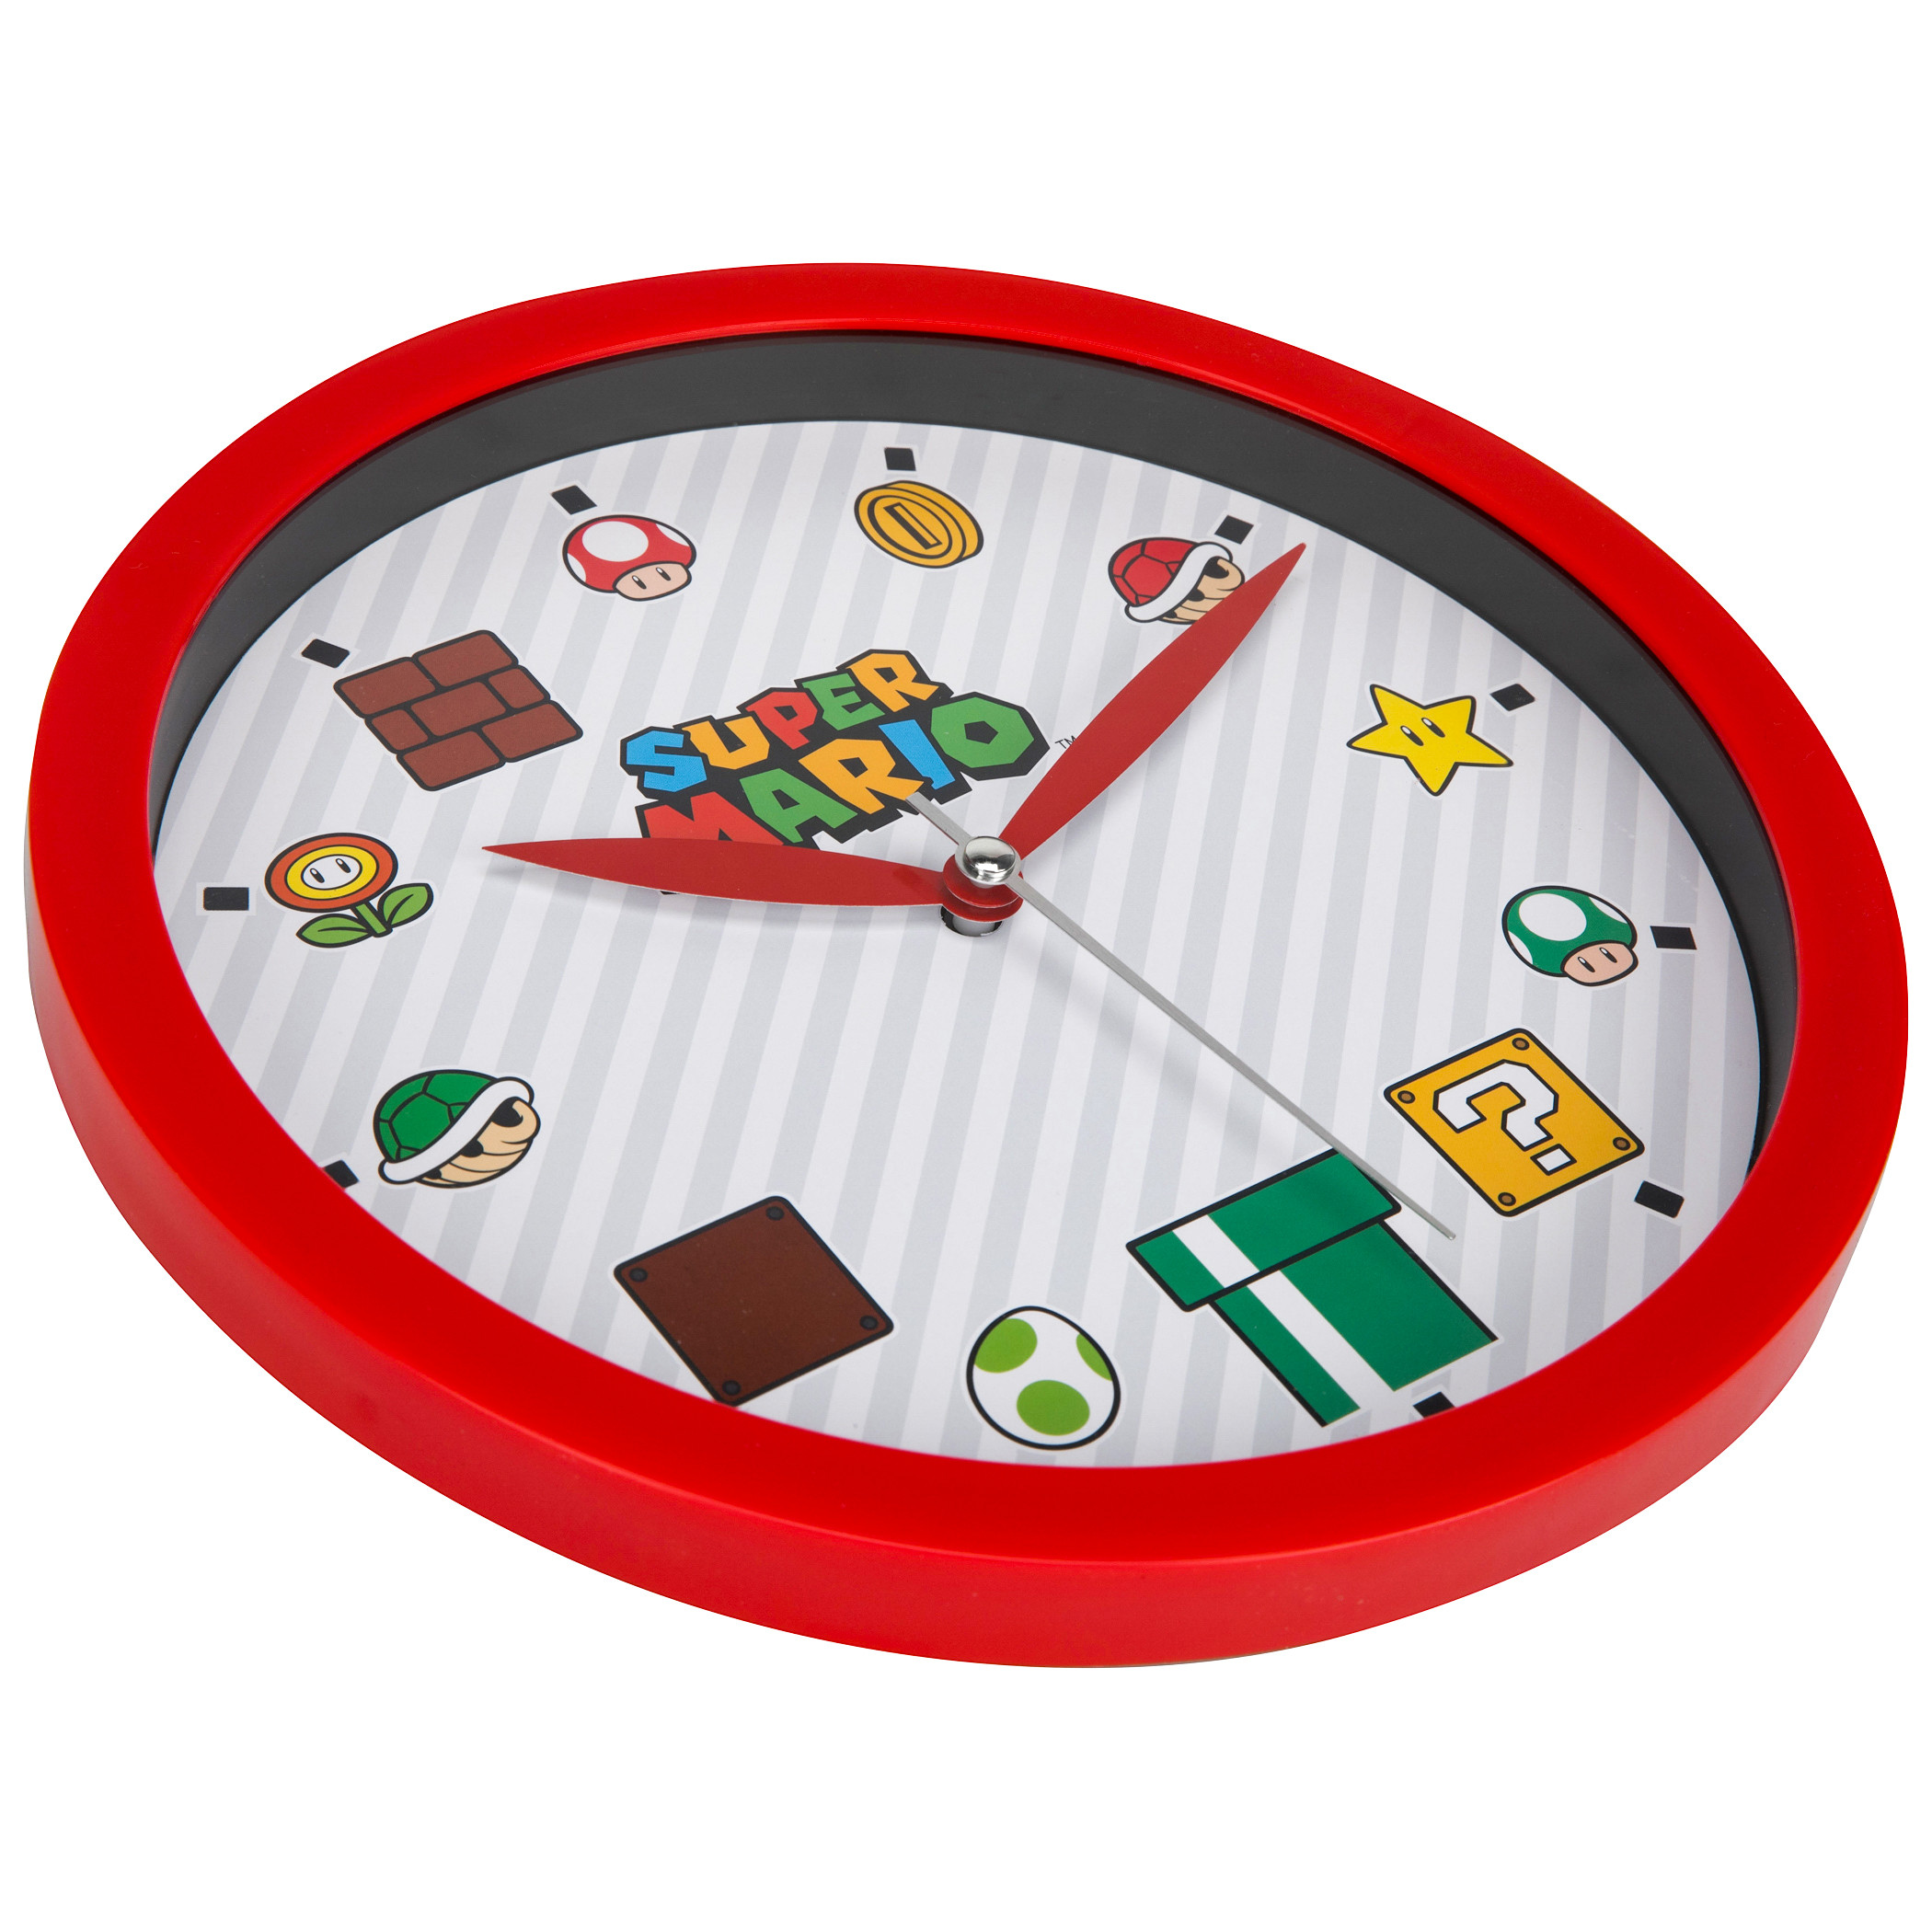 Super Mario Bros. Icons Wall Clock